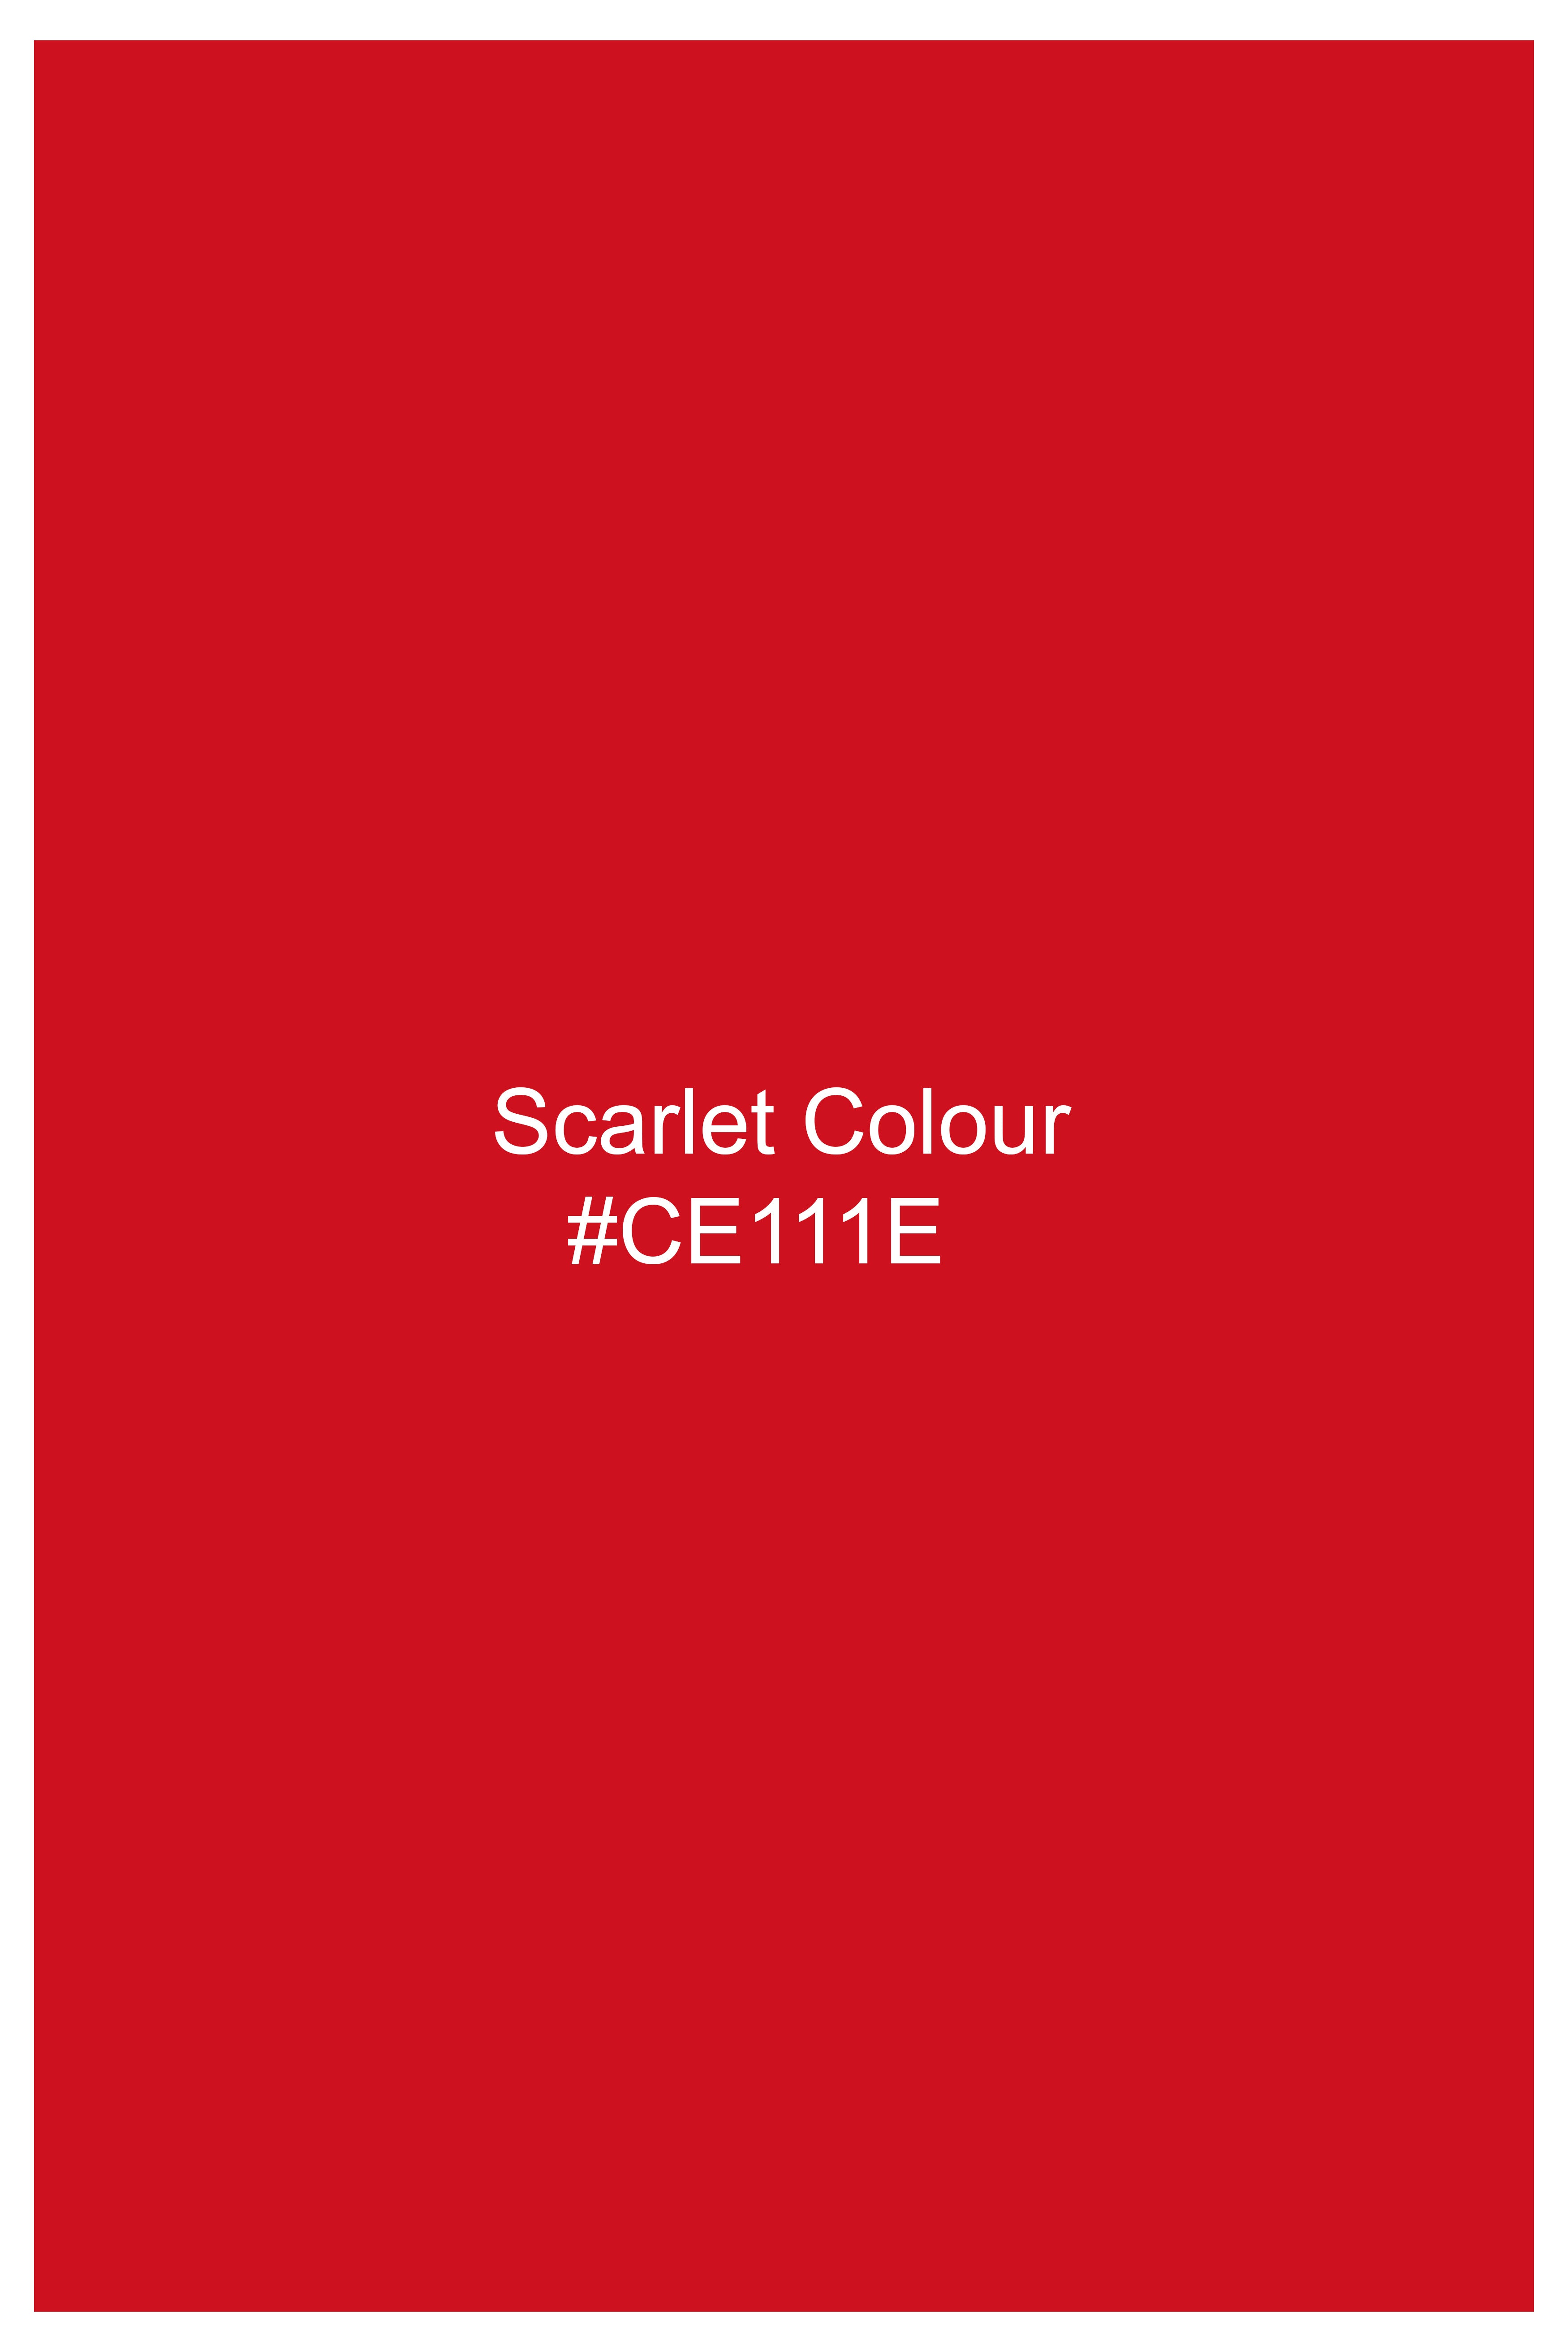 Scarlet Red Single Breasted Blazer BL3006-SB-36, BL3006-SB-38, BL3006-SB-40, BL3006-SB-42, BL3006-SB-44, BL3006-SB-46, BL3006-SB-48, BL3006-SB-50, BL3006-SB-52, BL3006-SB-54, BL3006-SB-56, BL3006-SB-58, BL3006-SB-60